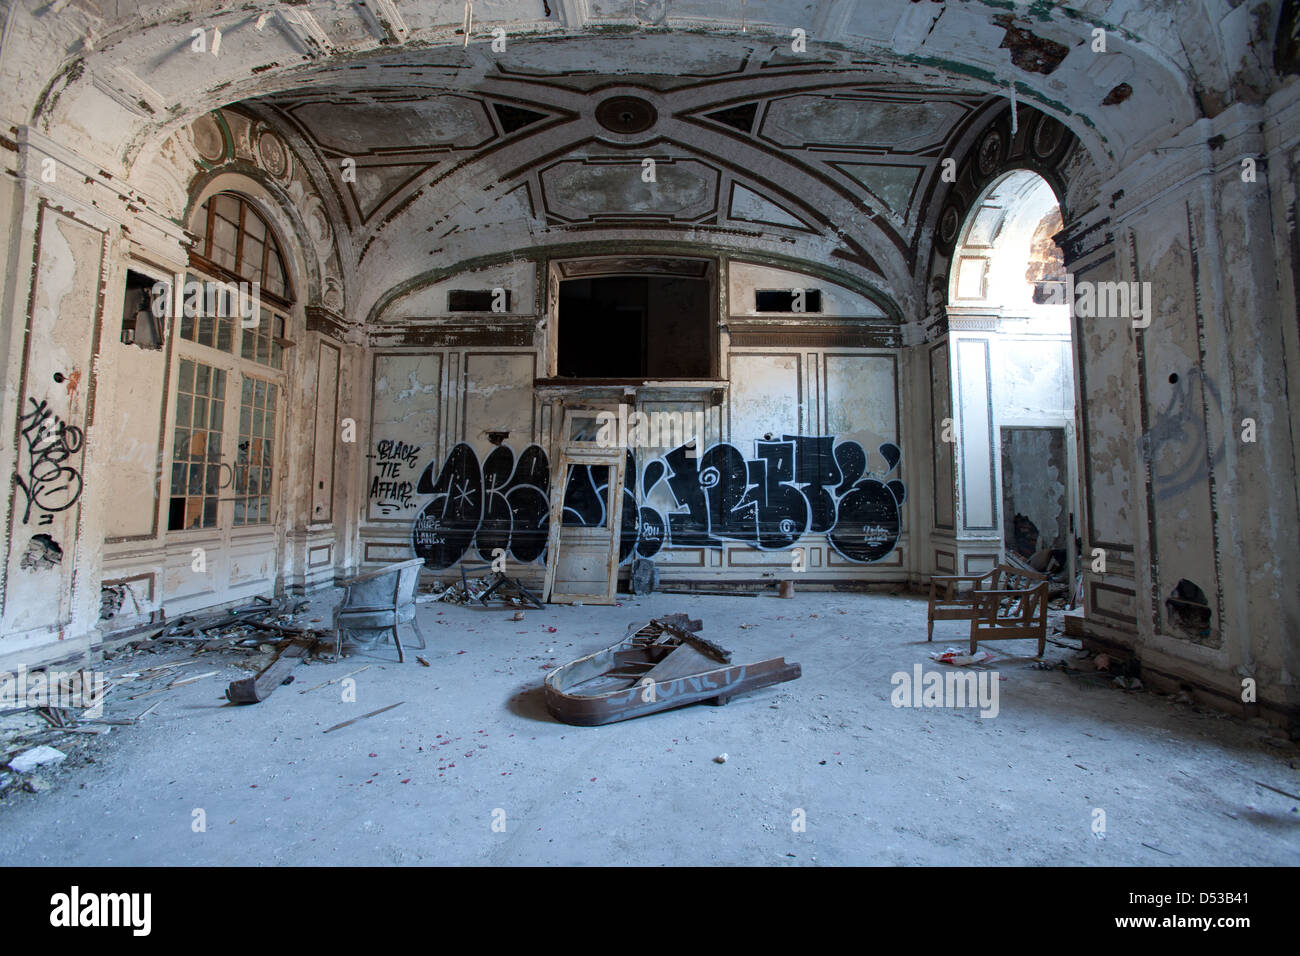 Abandoned Lee Plaza hotel in Detroit, Michigan Stock Photo - Alamy